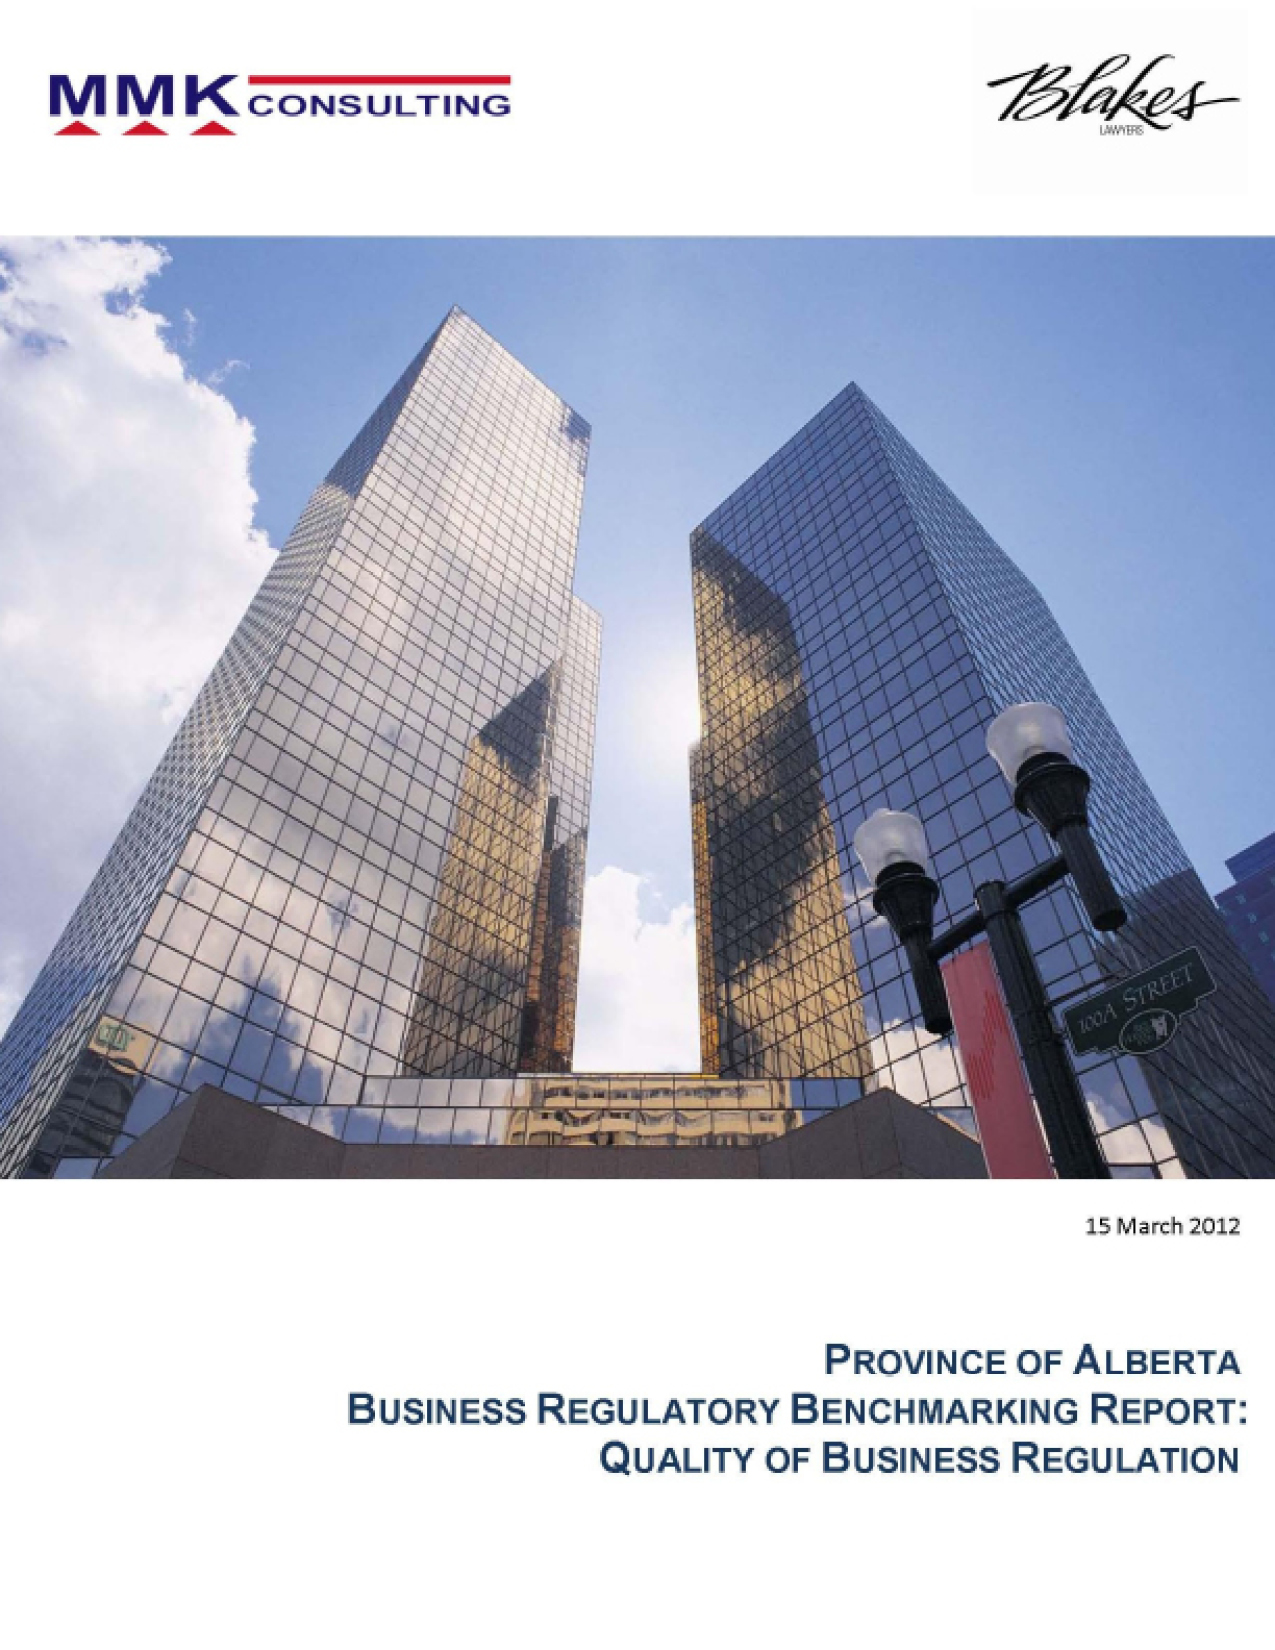 Alberta Quality of Business Regulation